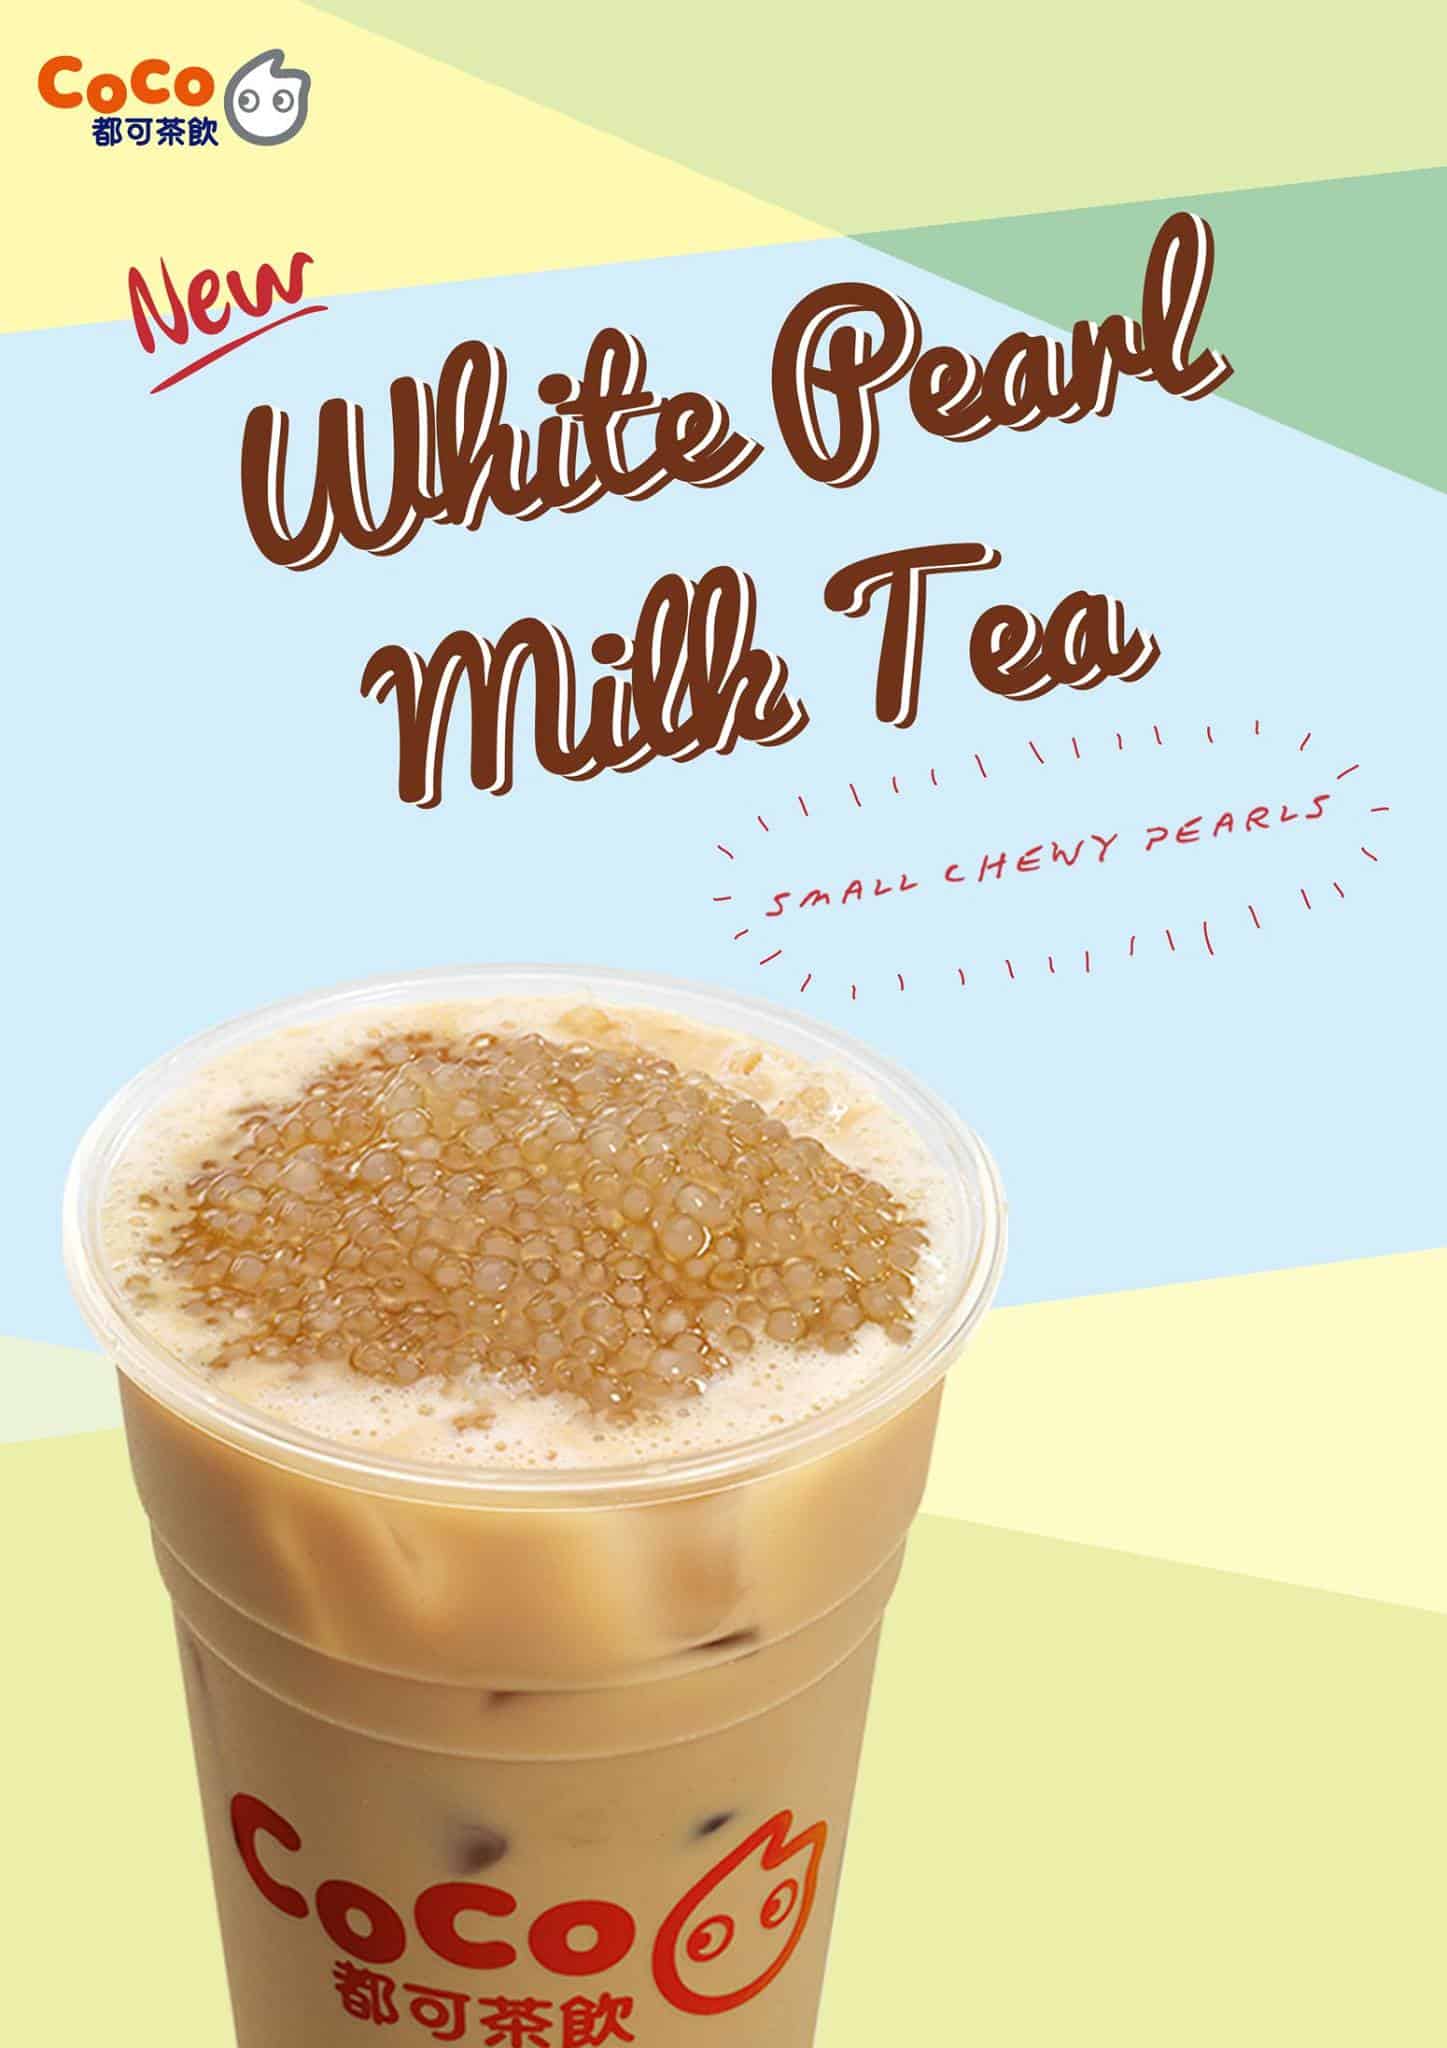 pearl milk tea coco fresh tea and juice menu